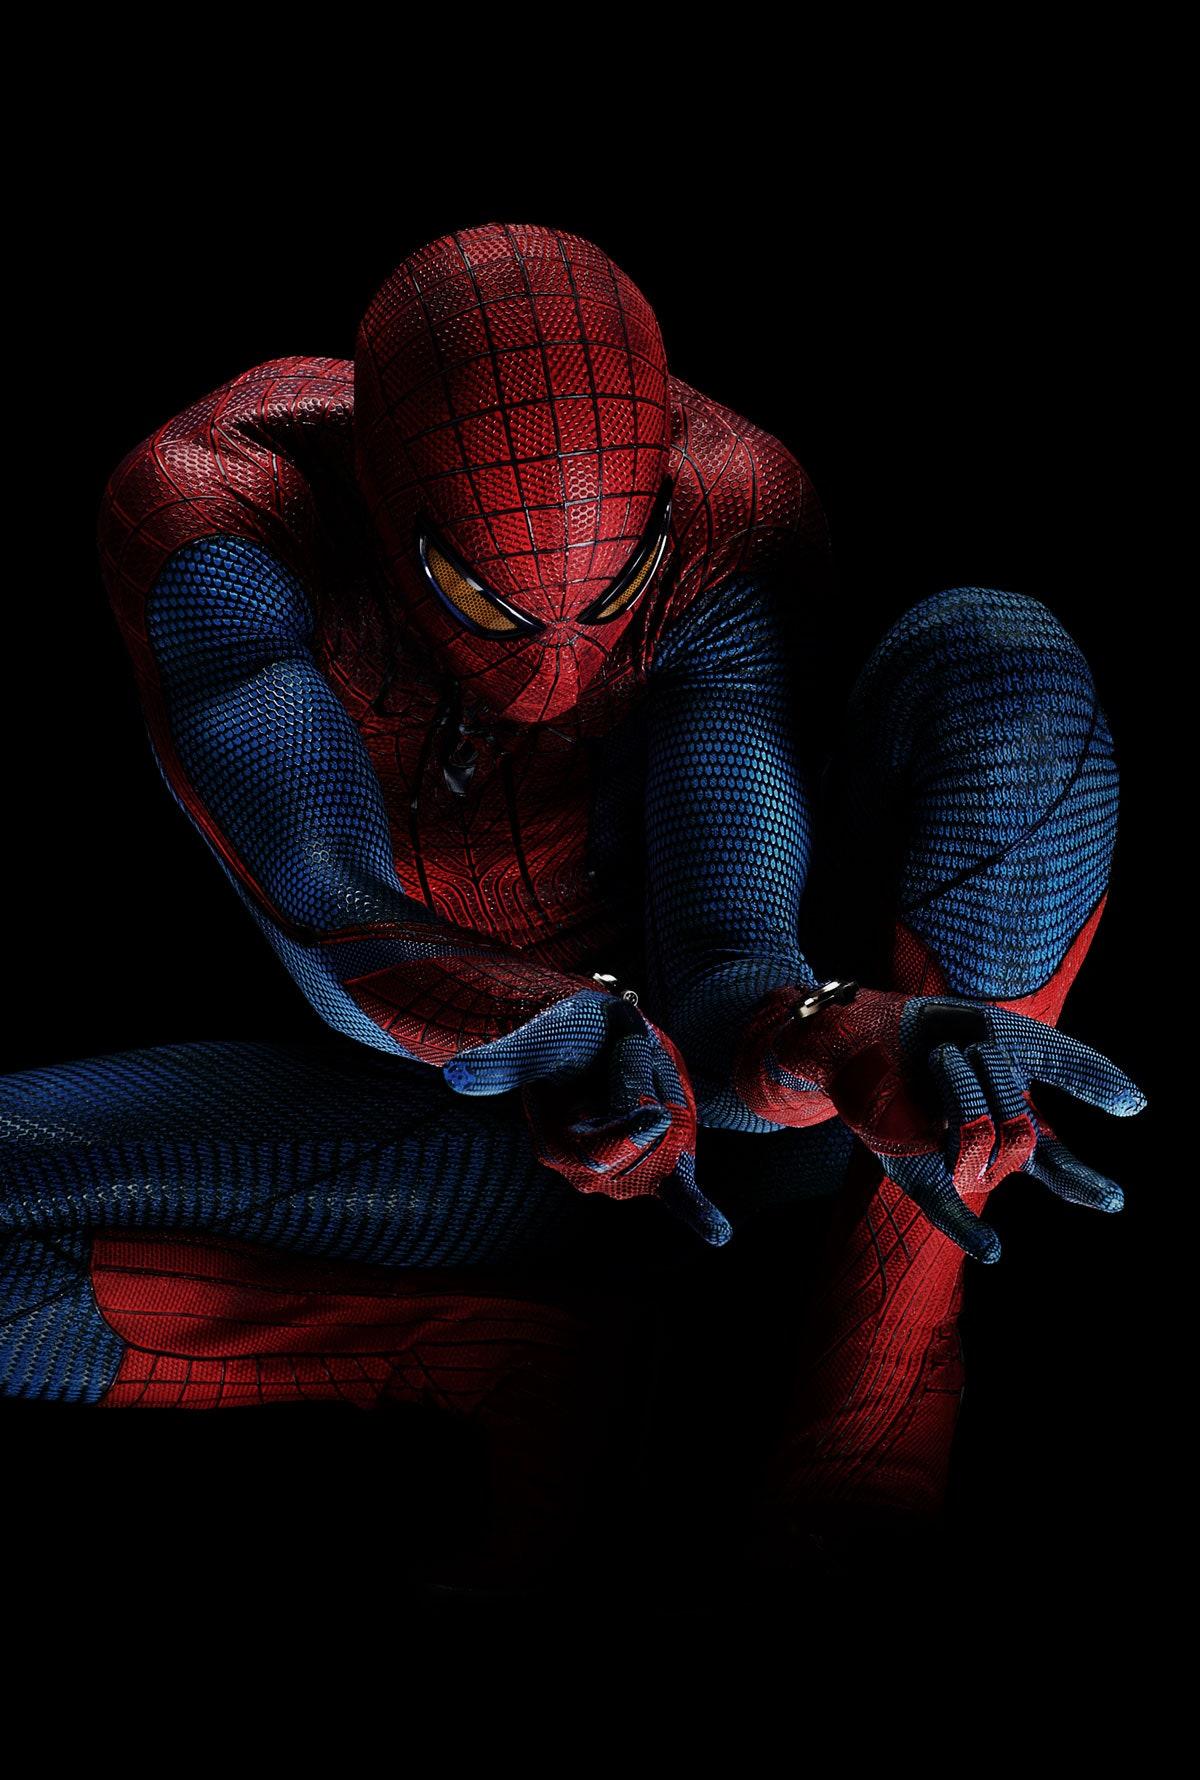 Spider Man Sad Wallpapers 7